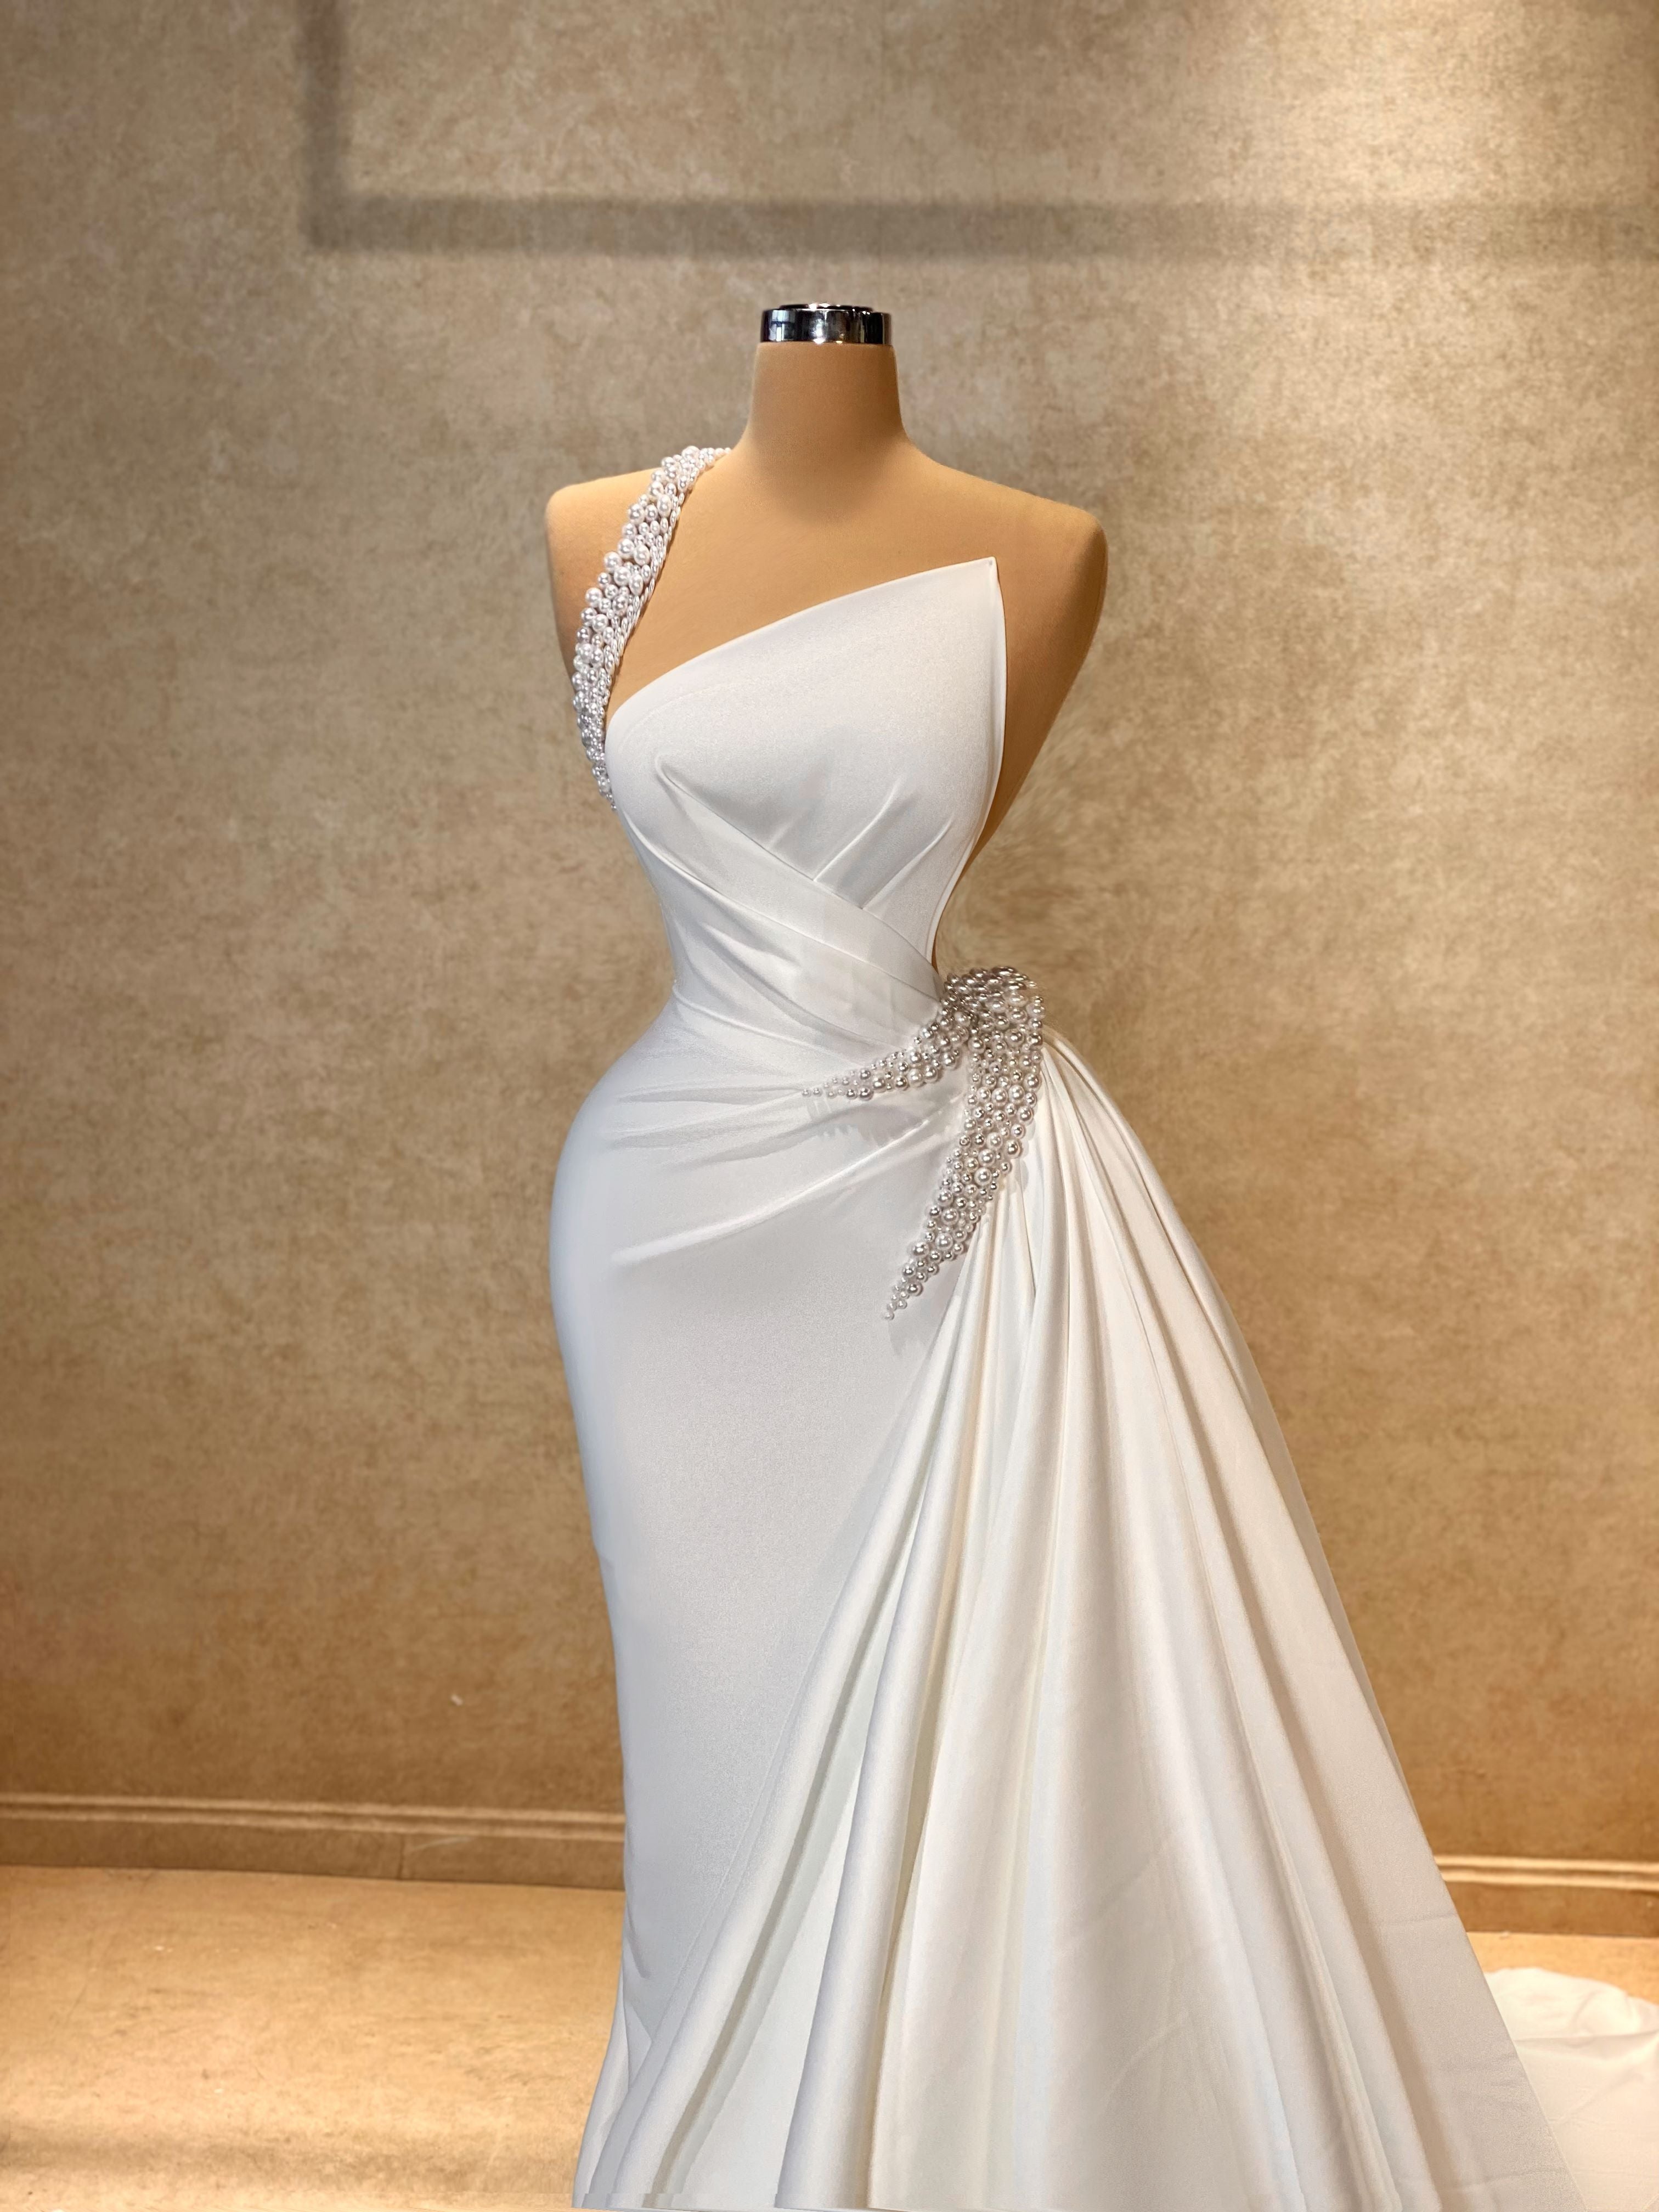 Single Strap Beaded Lace Embellished Wedding Ball Gown | Ball gowns  wedding, Organza wedding gowns, Modest wedding gowns